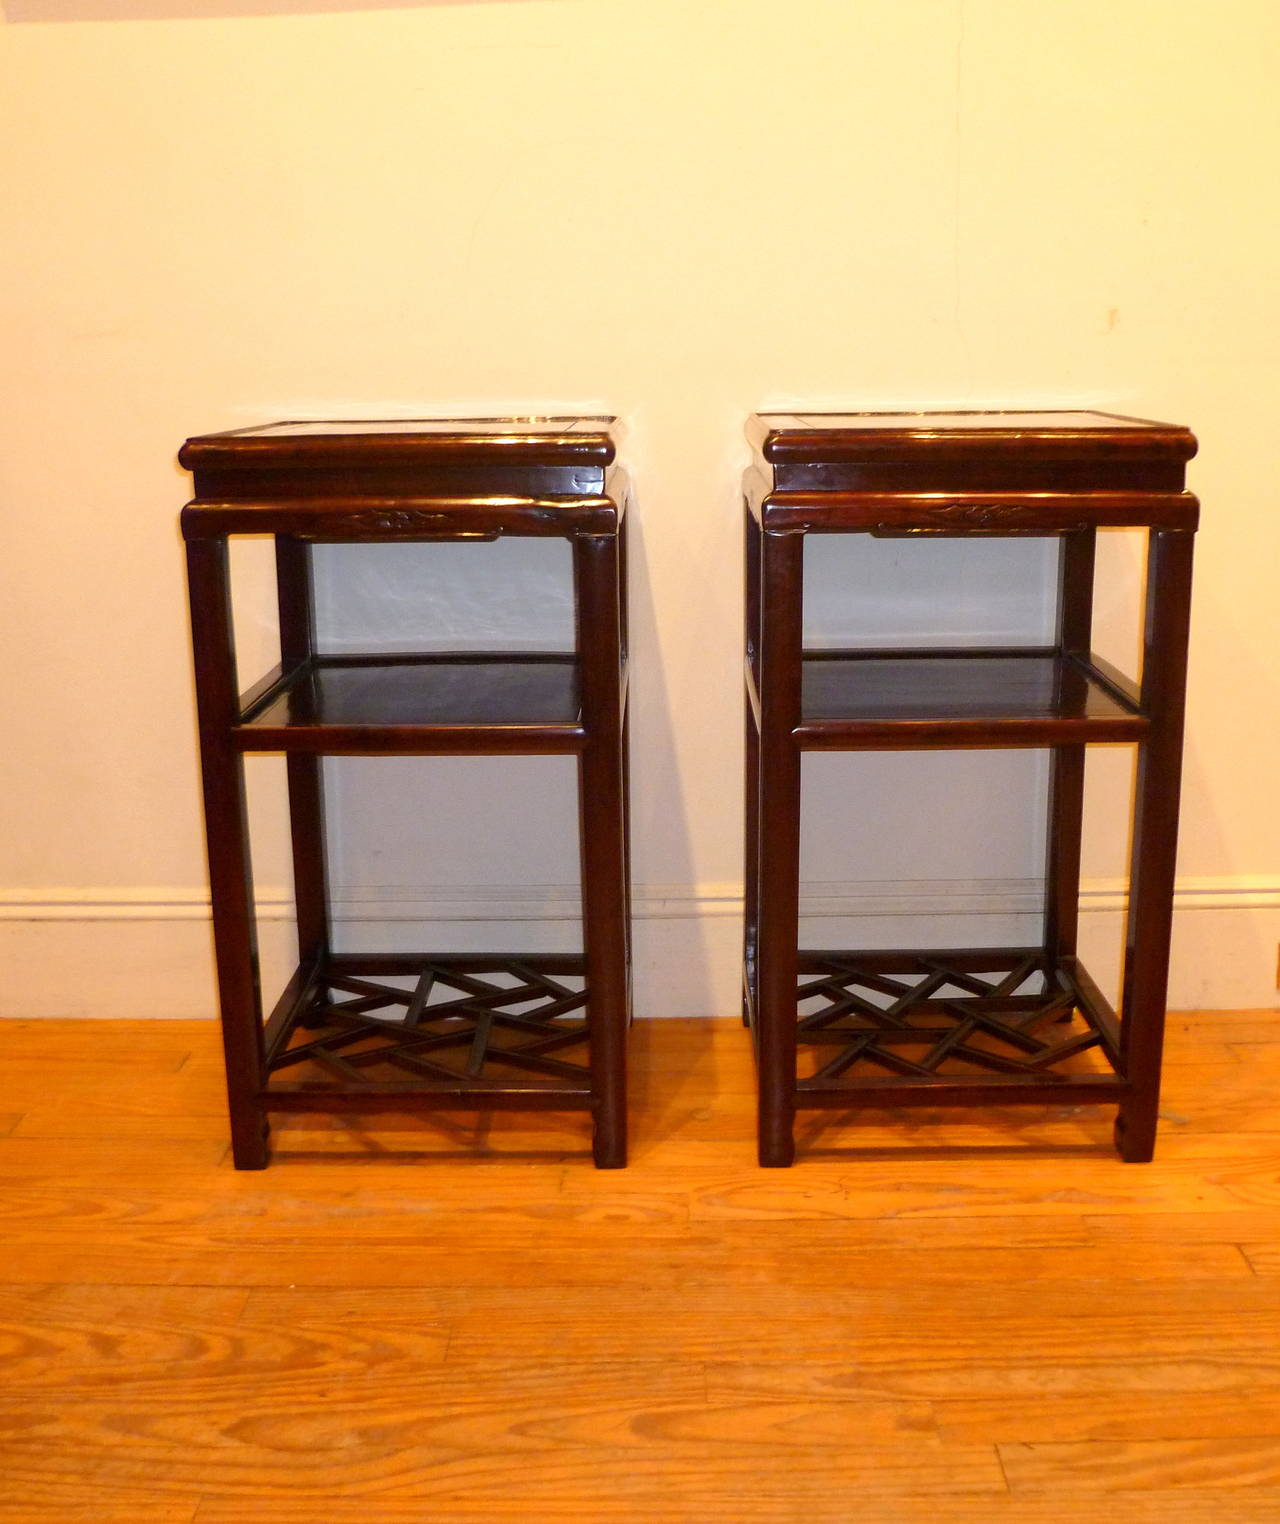 A pair fine ju mu wood end tables, geometric lattice fretwork on bottom shelves, simple form, beautiful wood grain, 19th century.